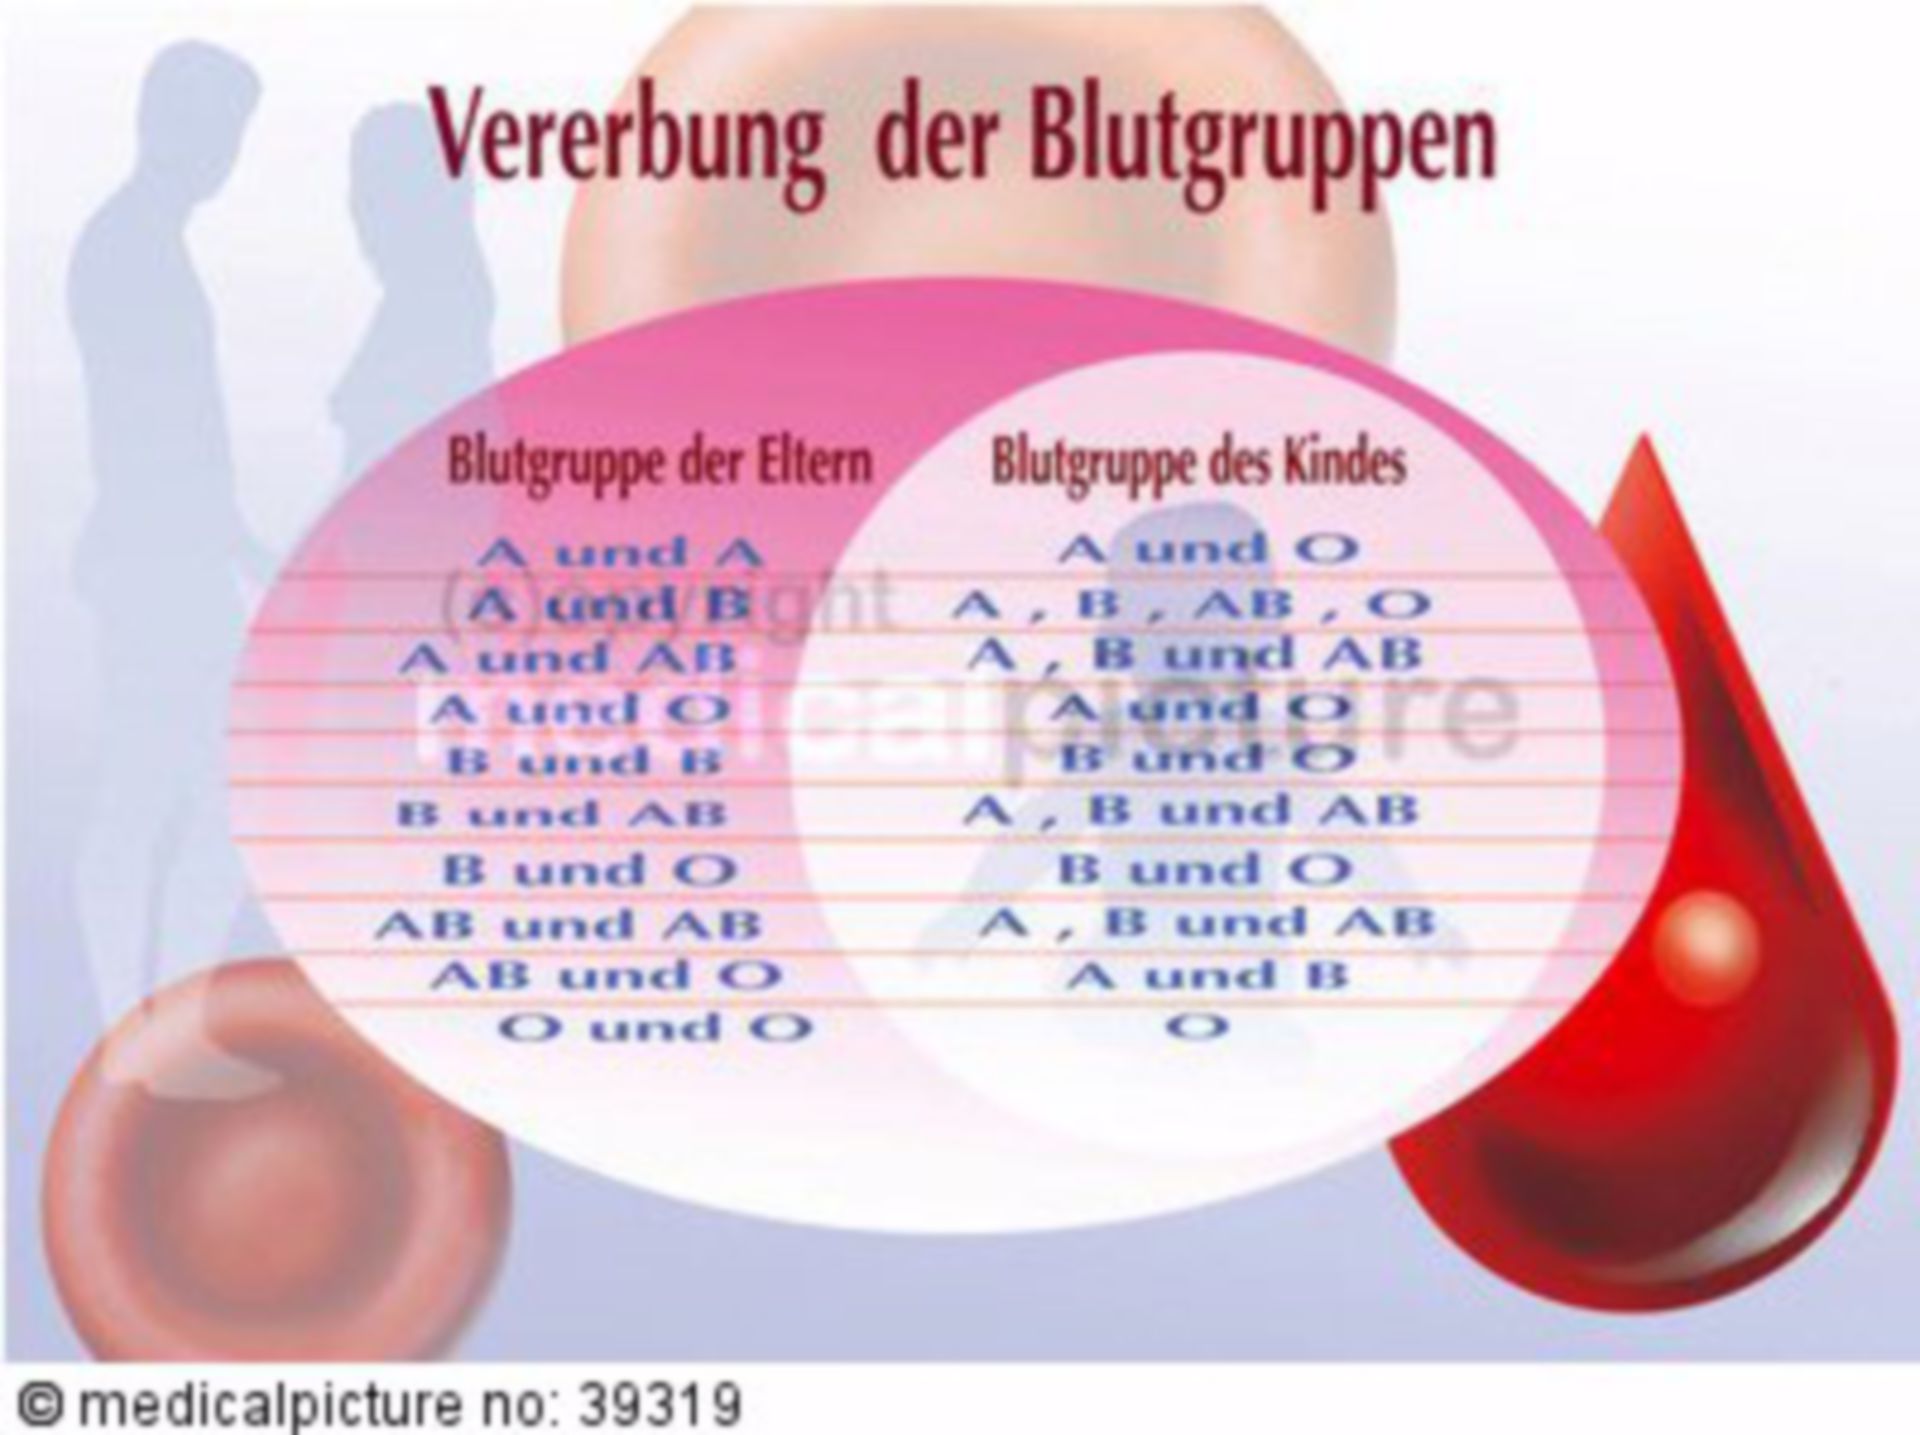 Inheritance of Blood Types